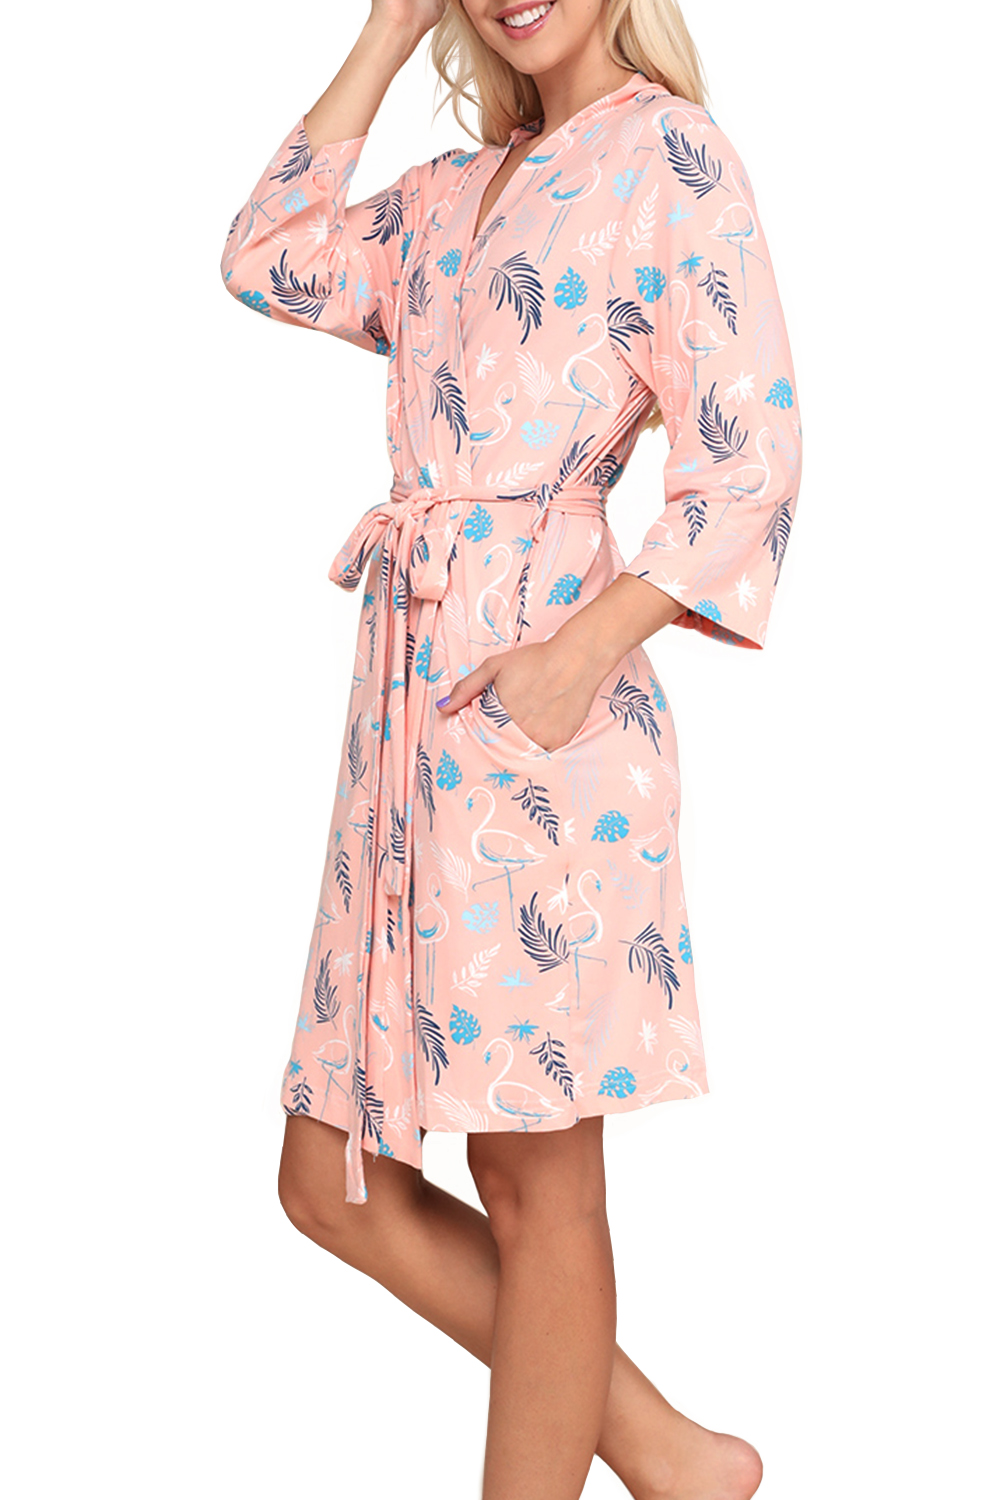 Doublju Women's Kimono Robe Sleepwear Pajama (Plus Size Available) - image 3 of 5